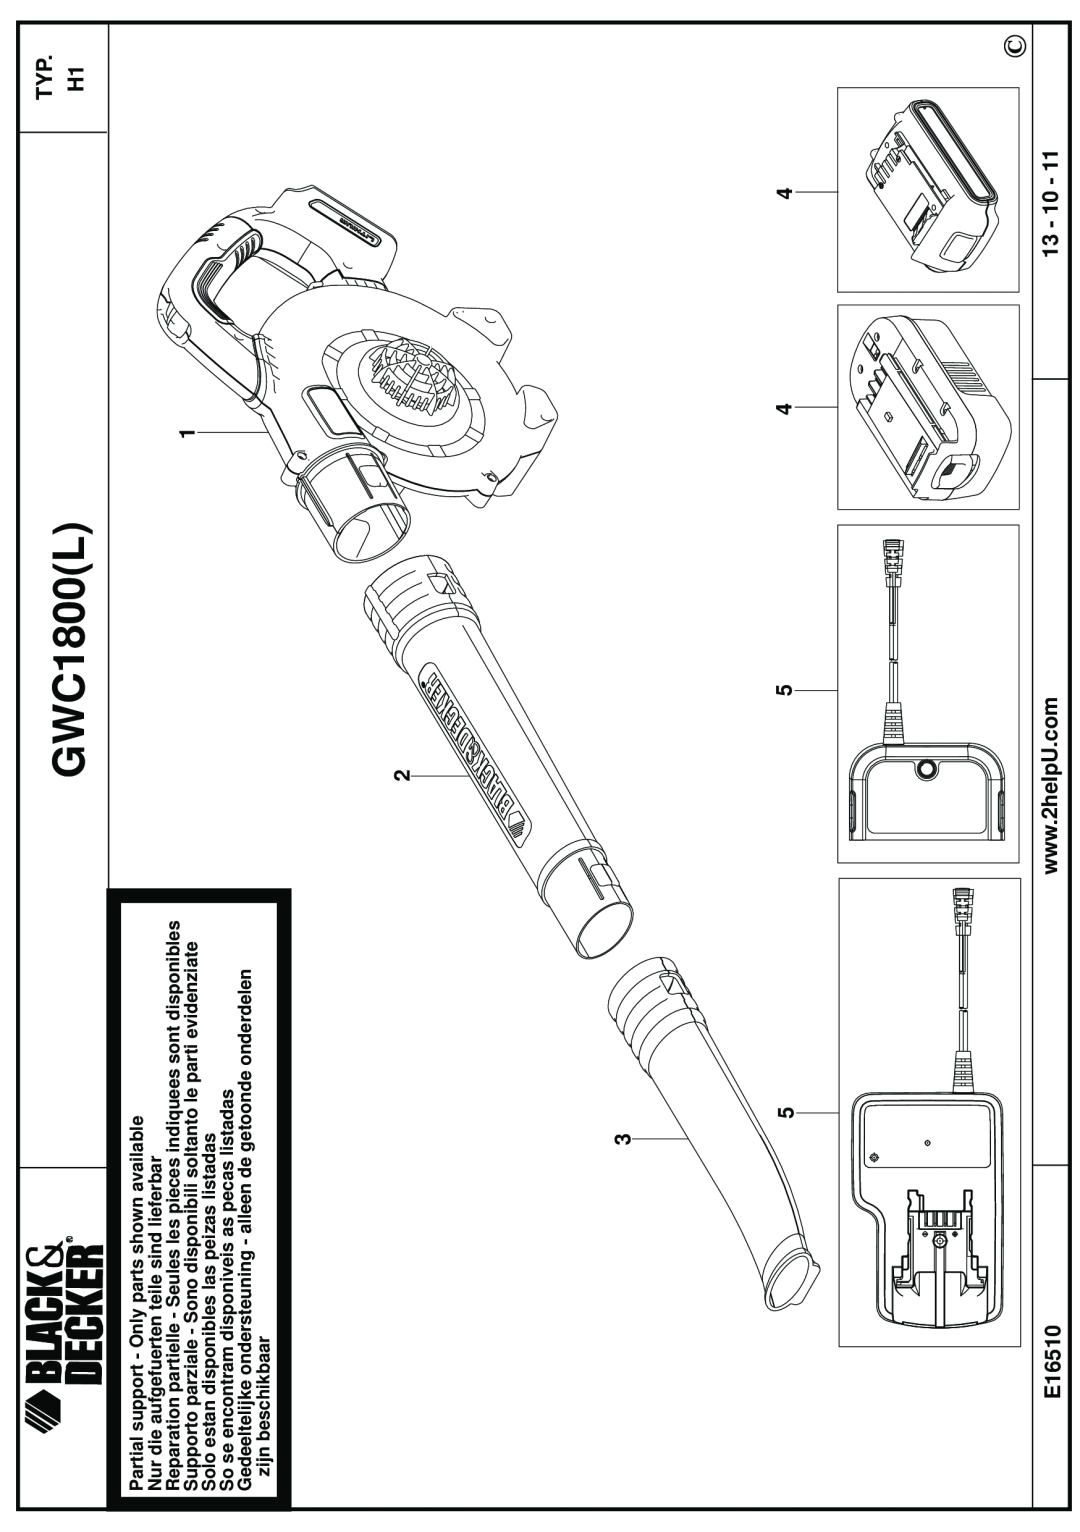 Black & Decker GWC1800L manual E16510 